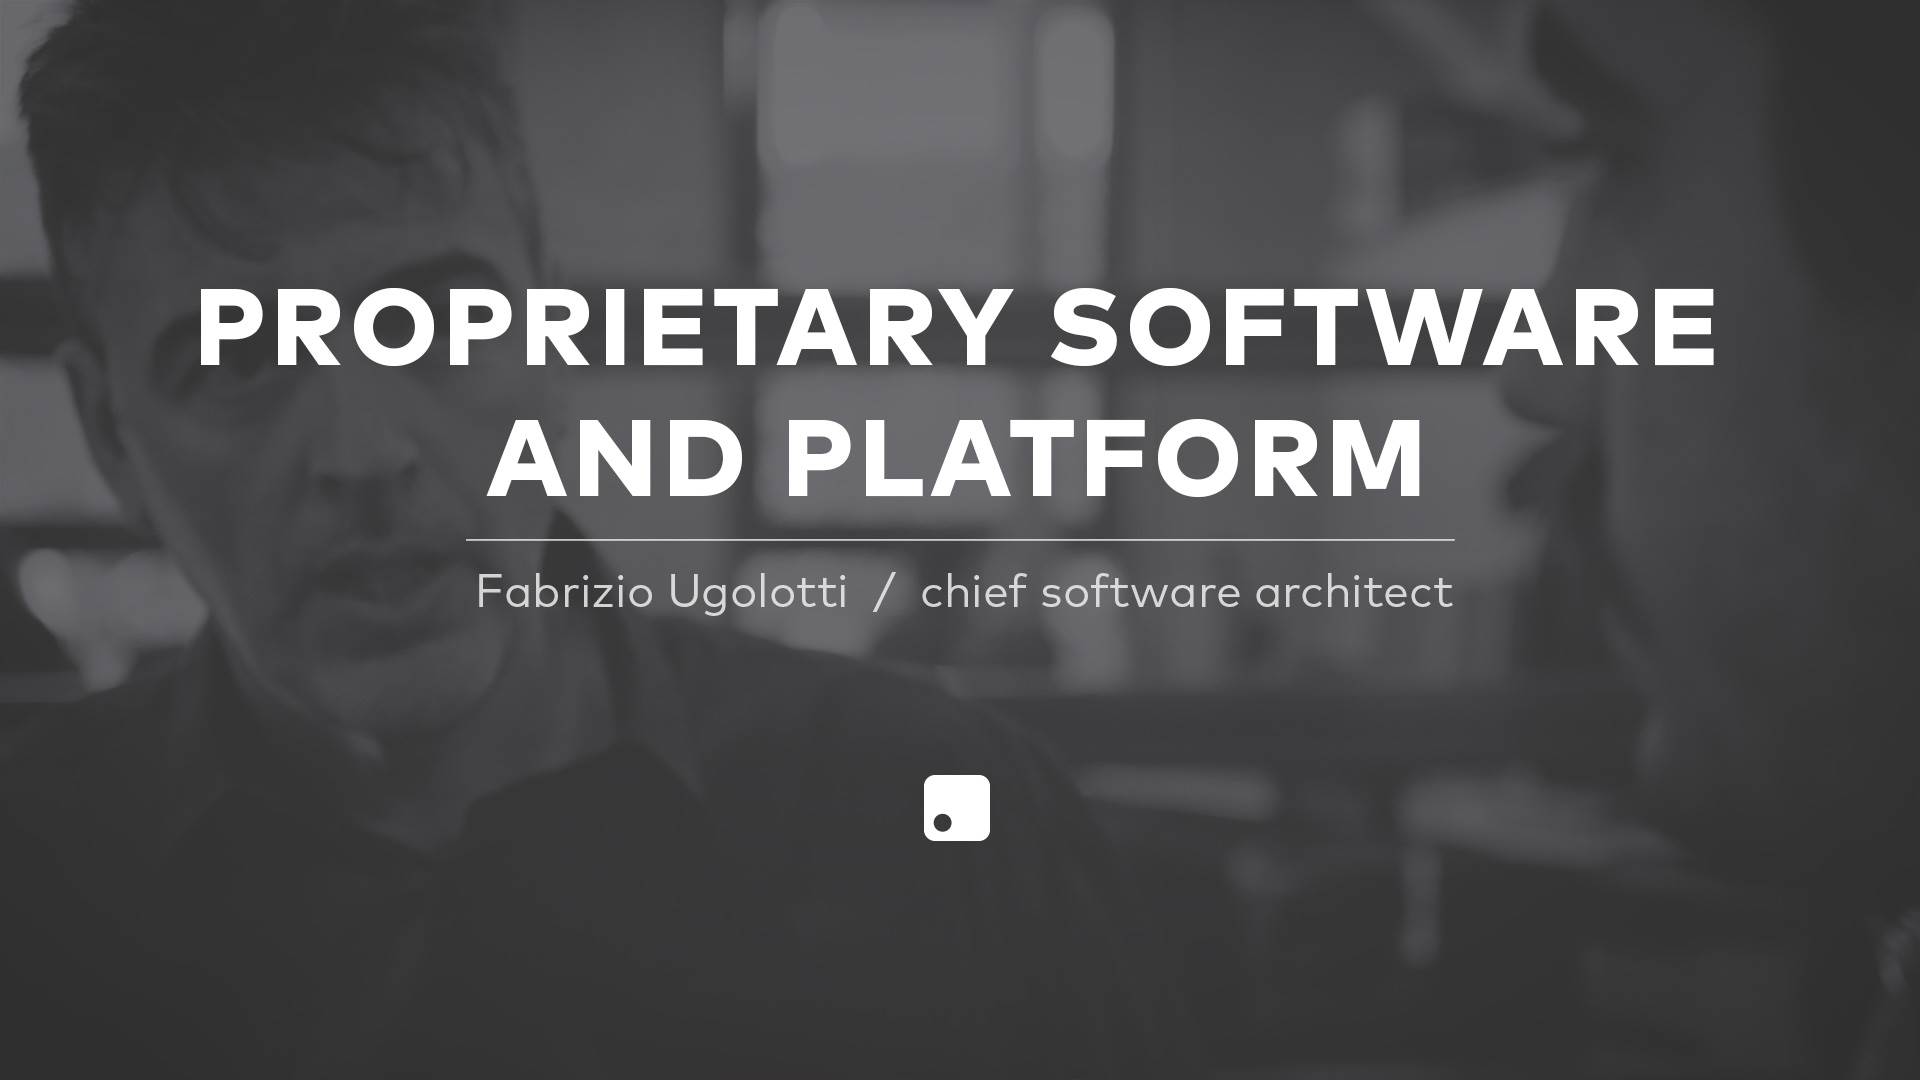 Proprietary software and platform